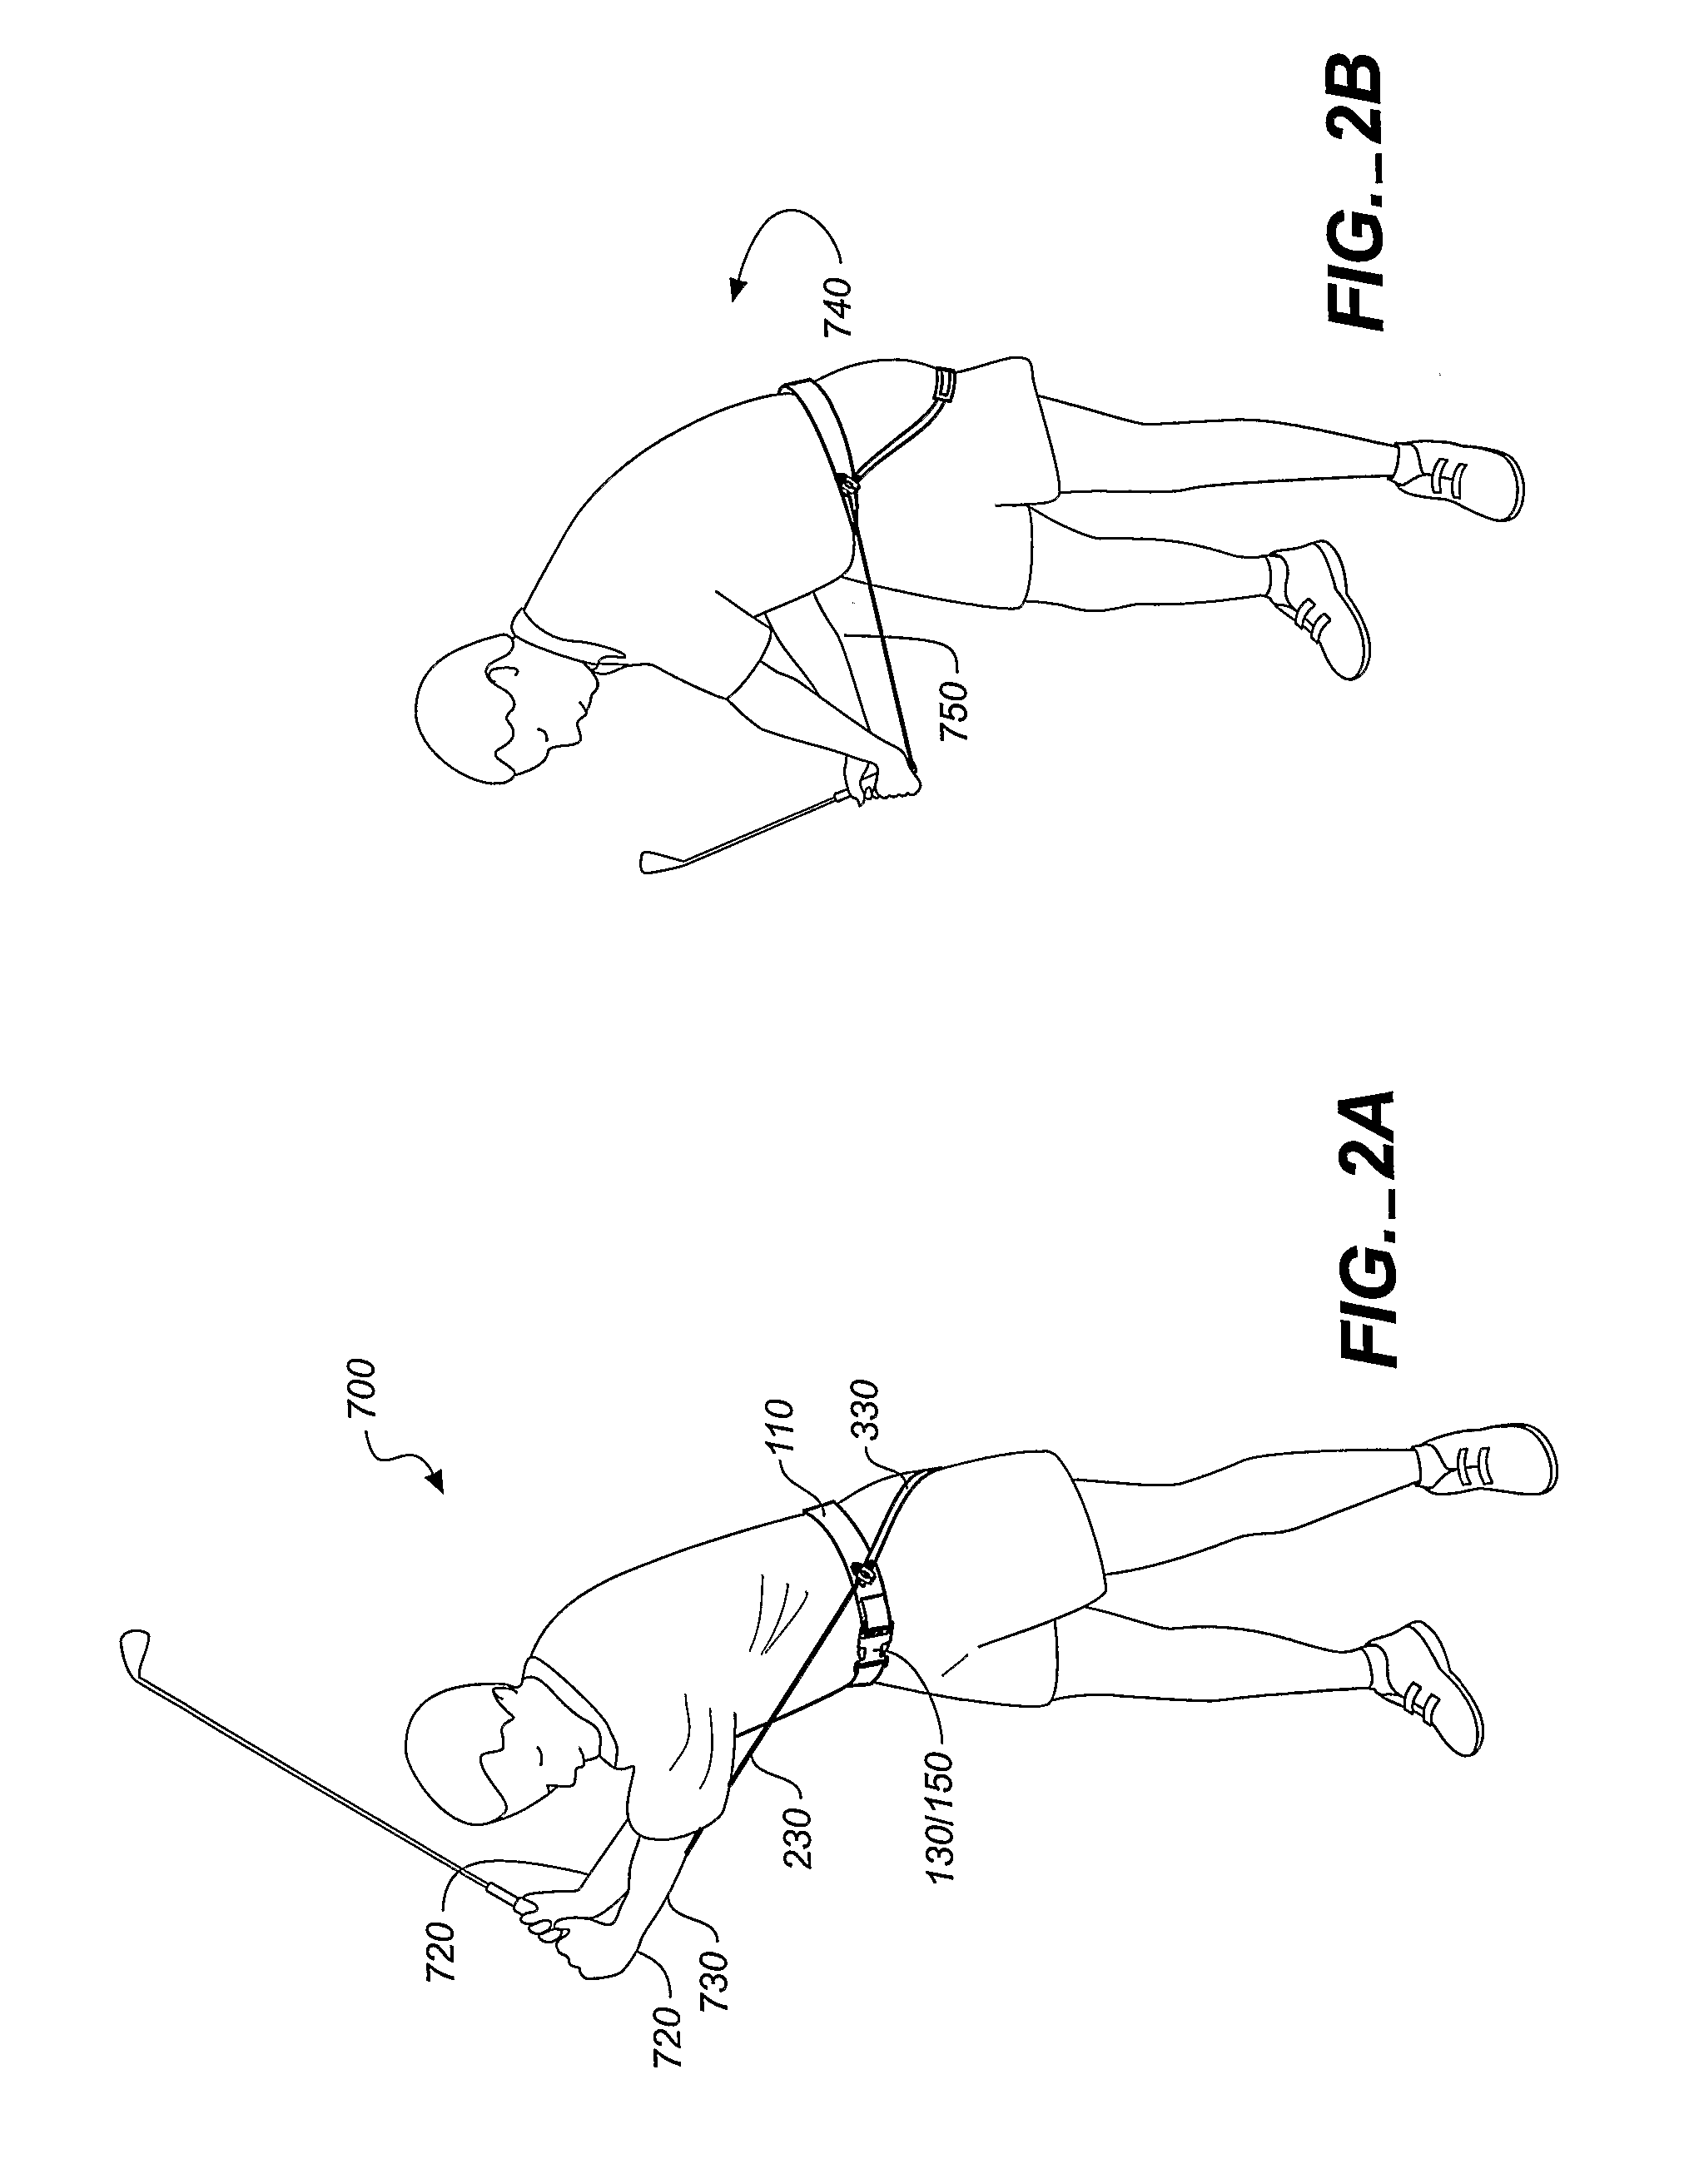 Multi-sport swing training apparatus